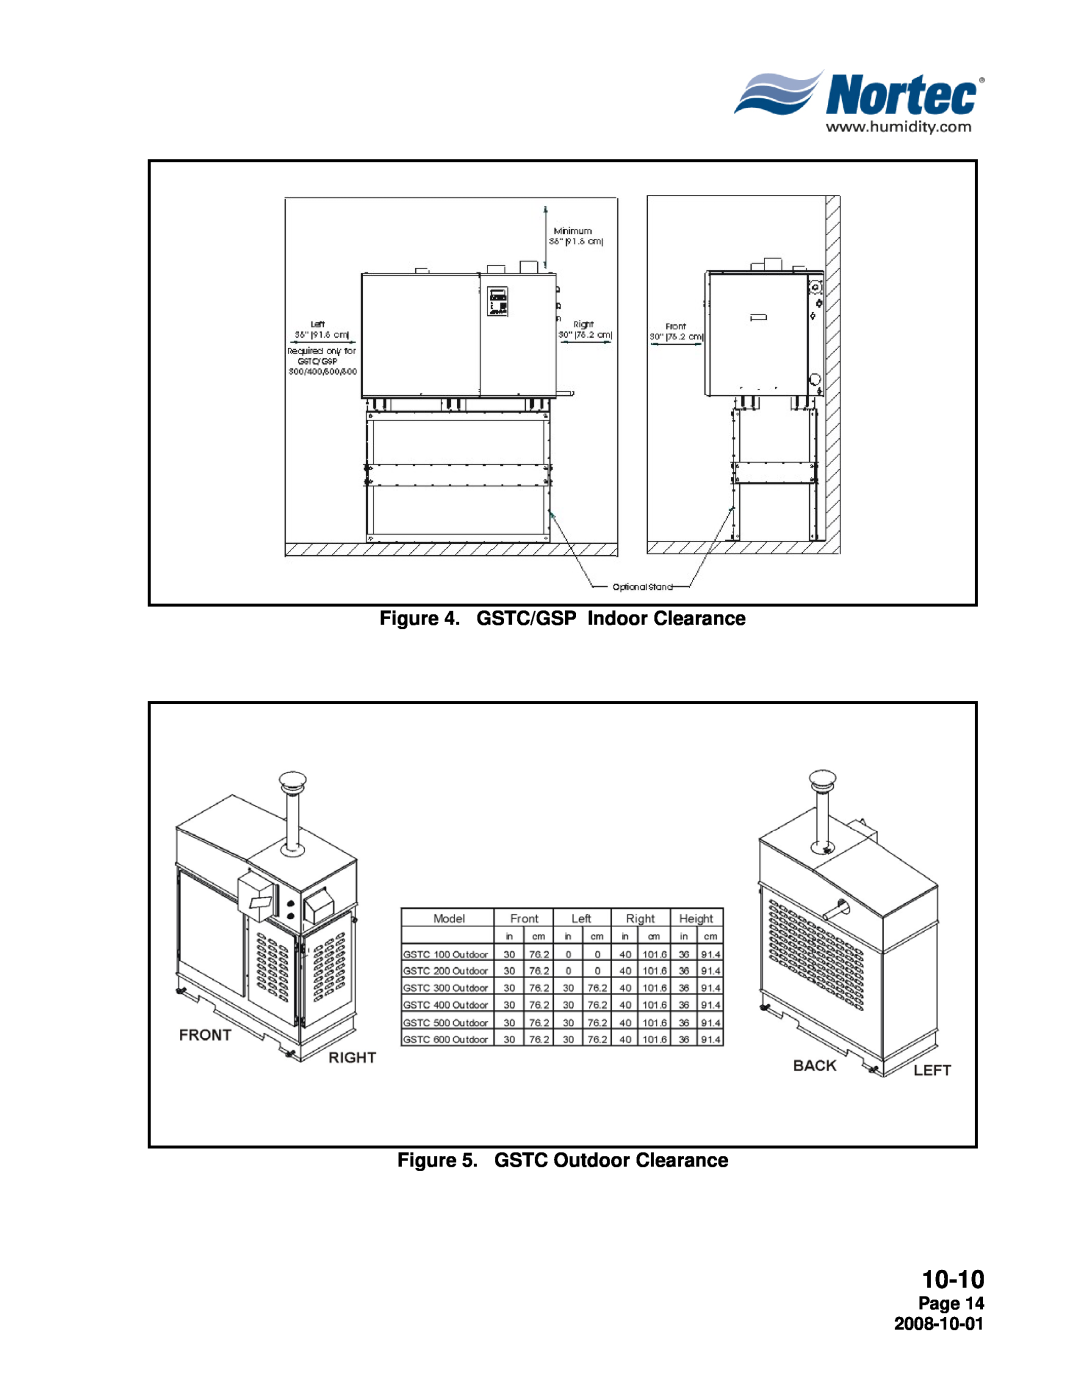 Nortec Industries GSTC Indoor manual GSTC/GSP Indoor Clearance, GSTC Outdoor Clearance, 10-10, Page 